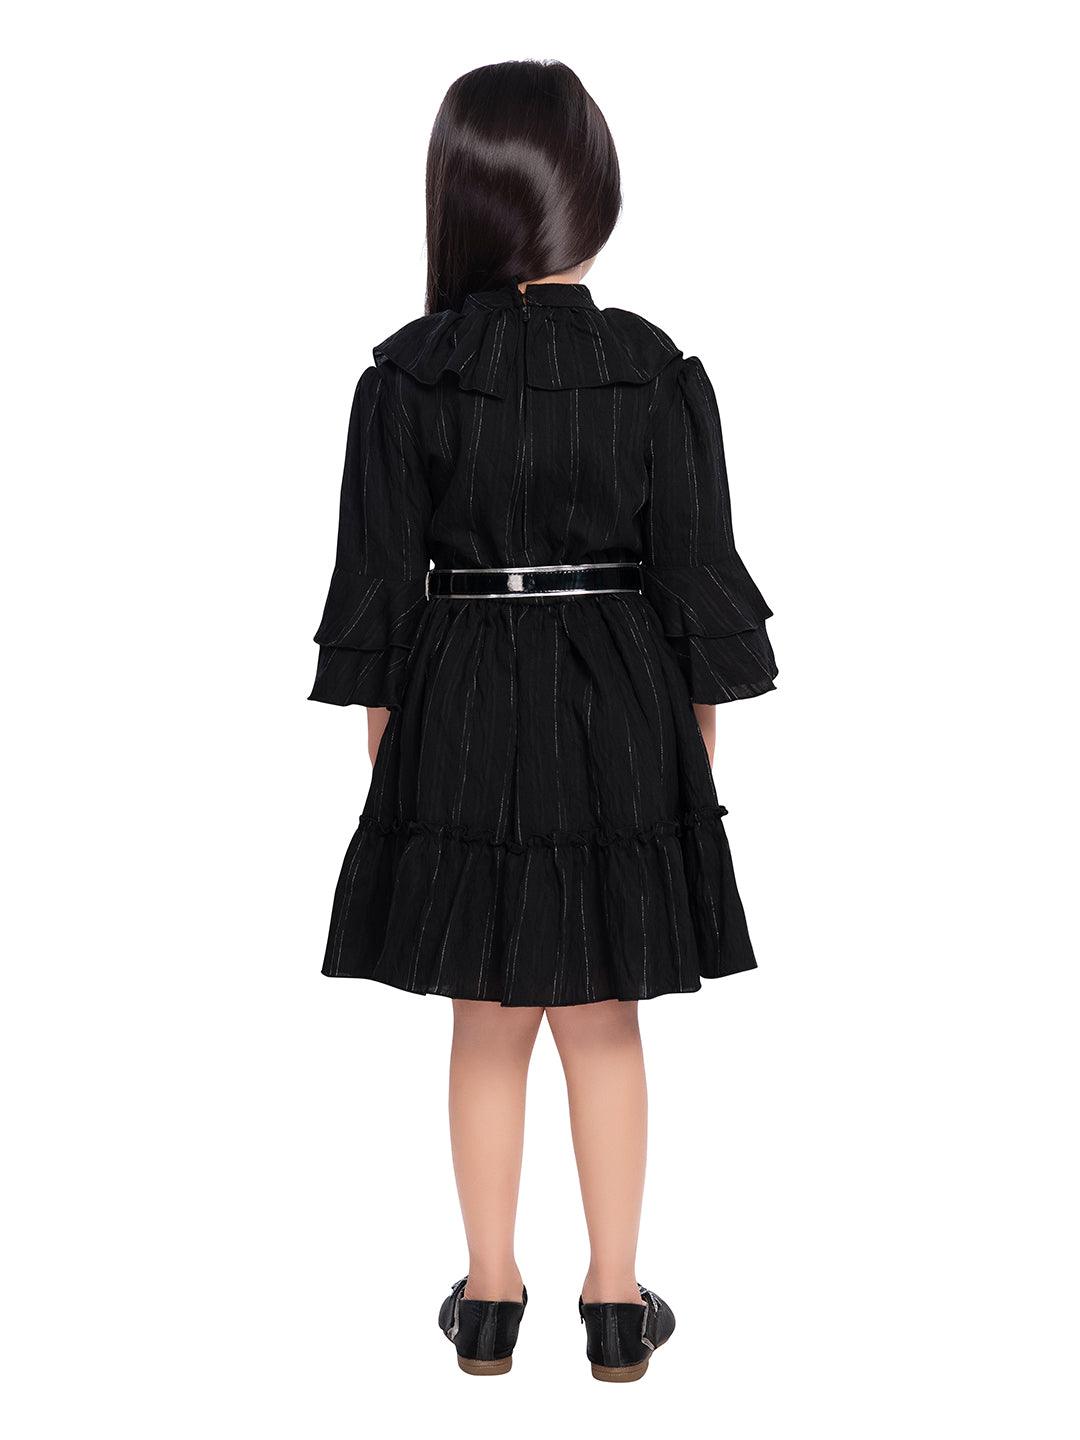 Tiny Baby Black Colored Dress - 2060 Black - TINY BABY INDIA shop.tinybaby.in